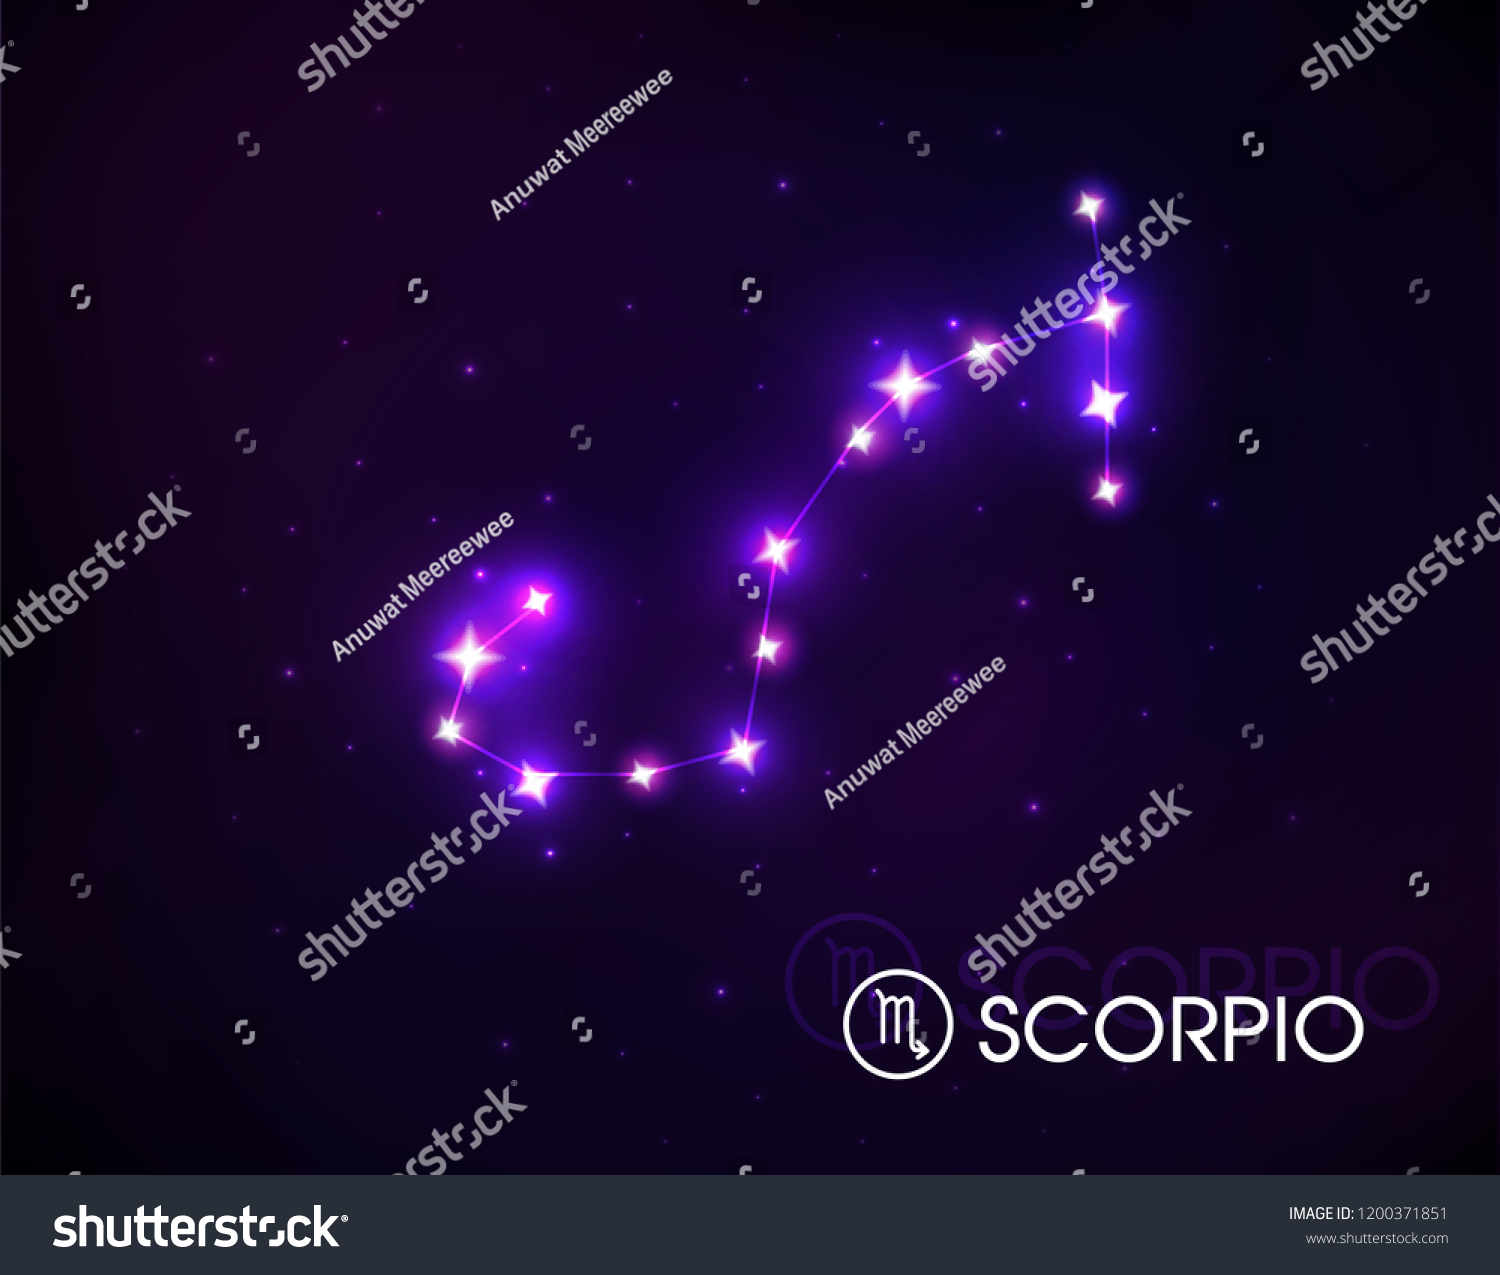 Scorpio Position Star Link Zodiac Sign Stock Vector (Royalty Free ...